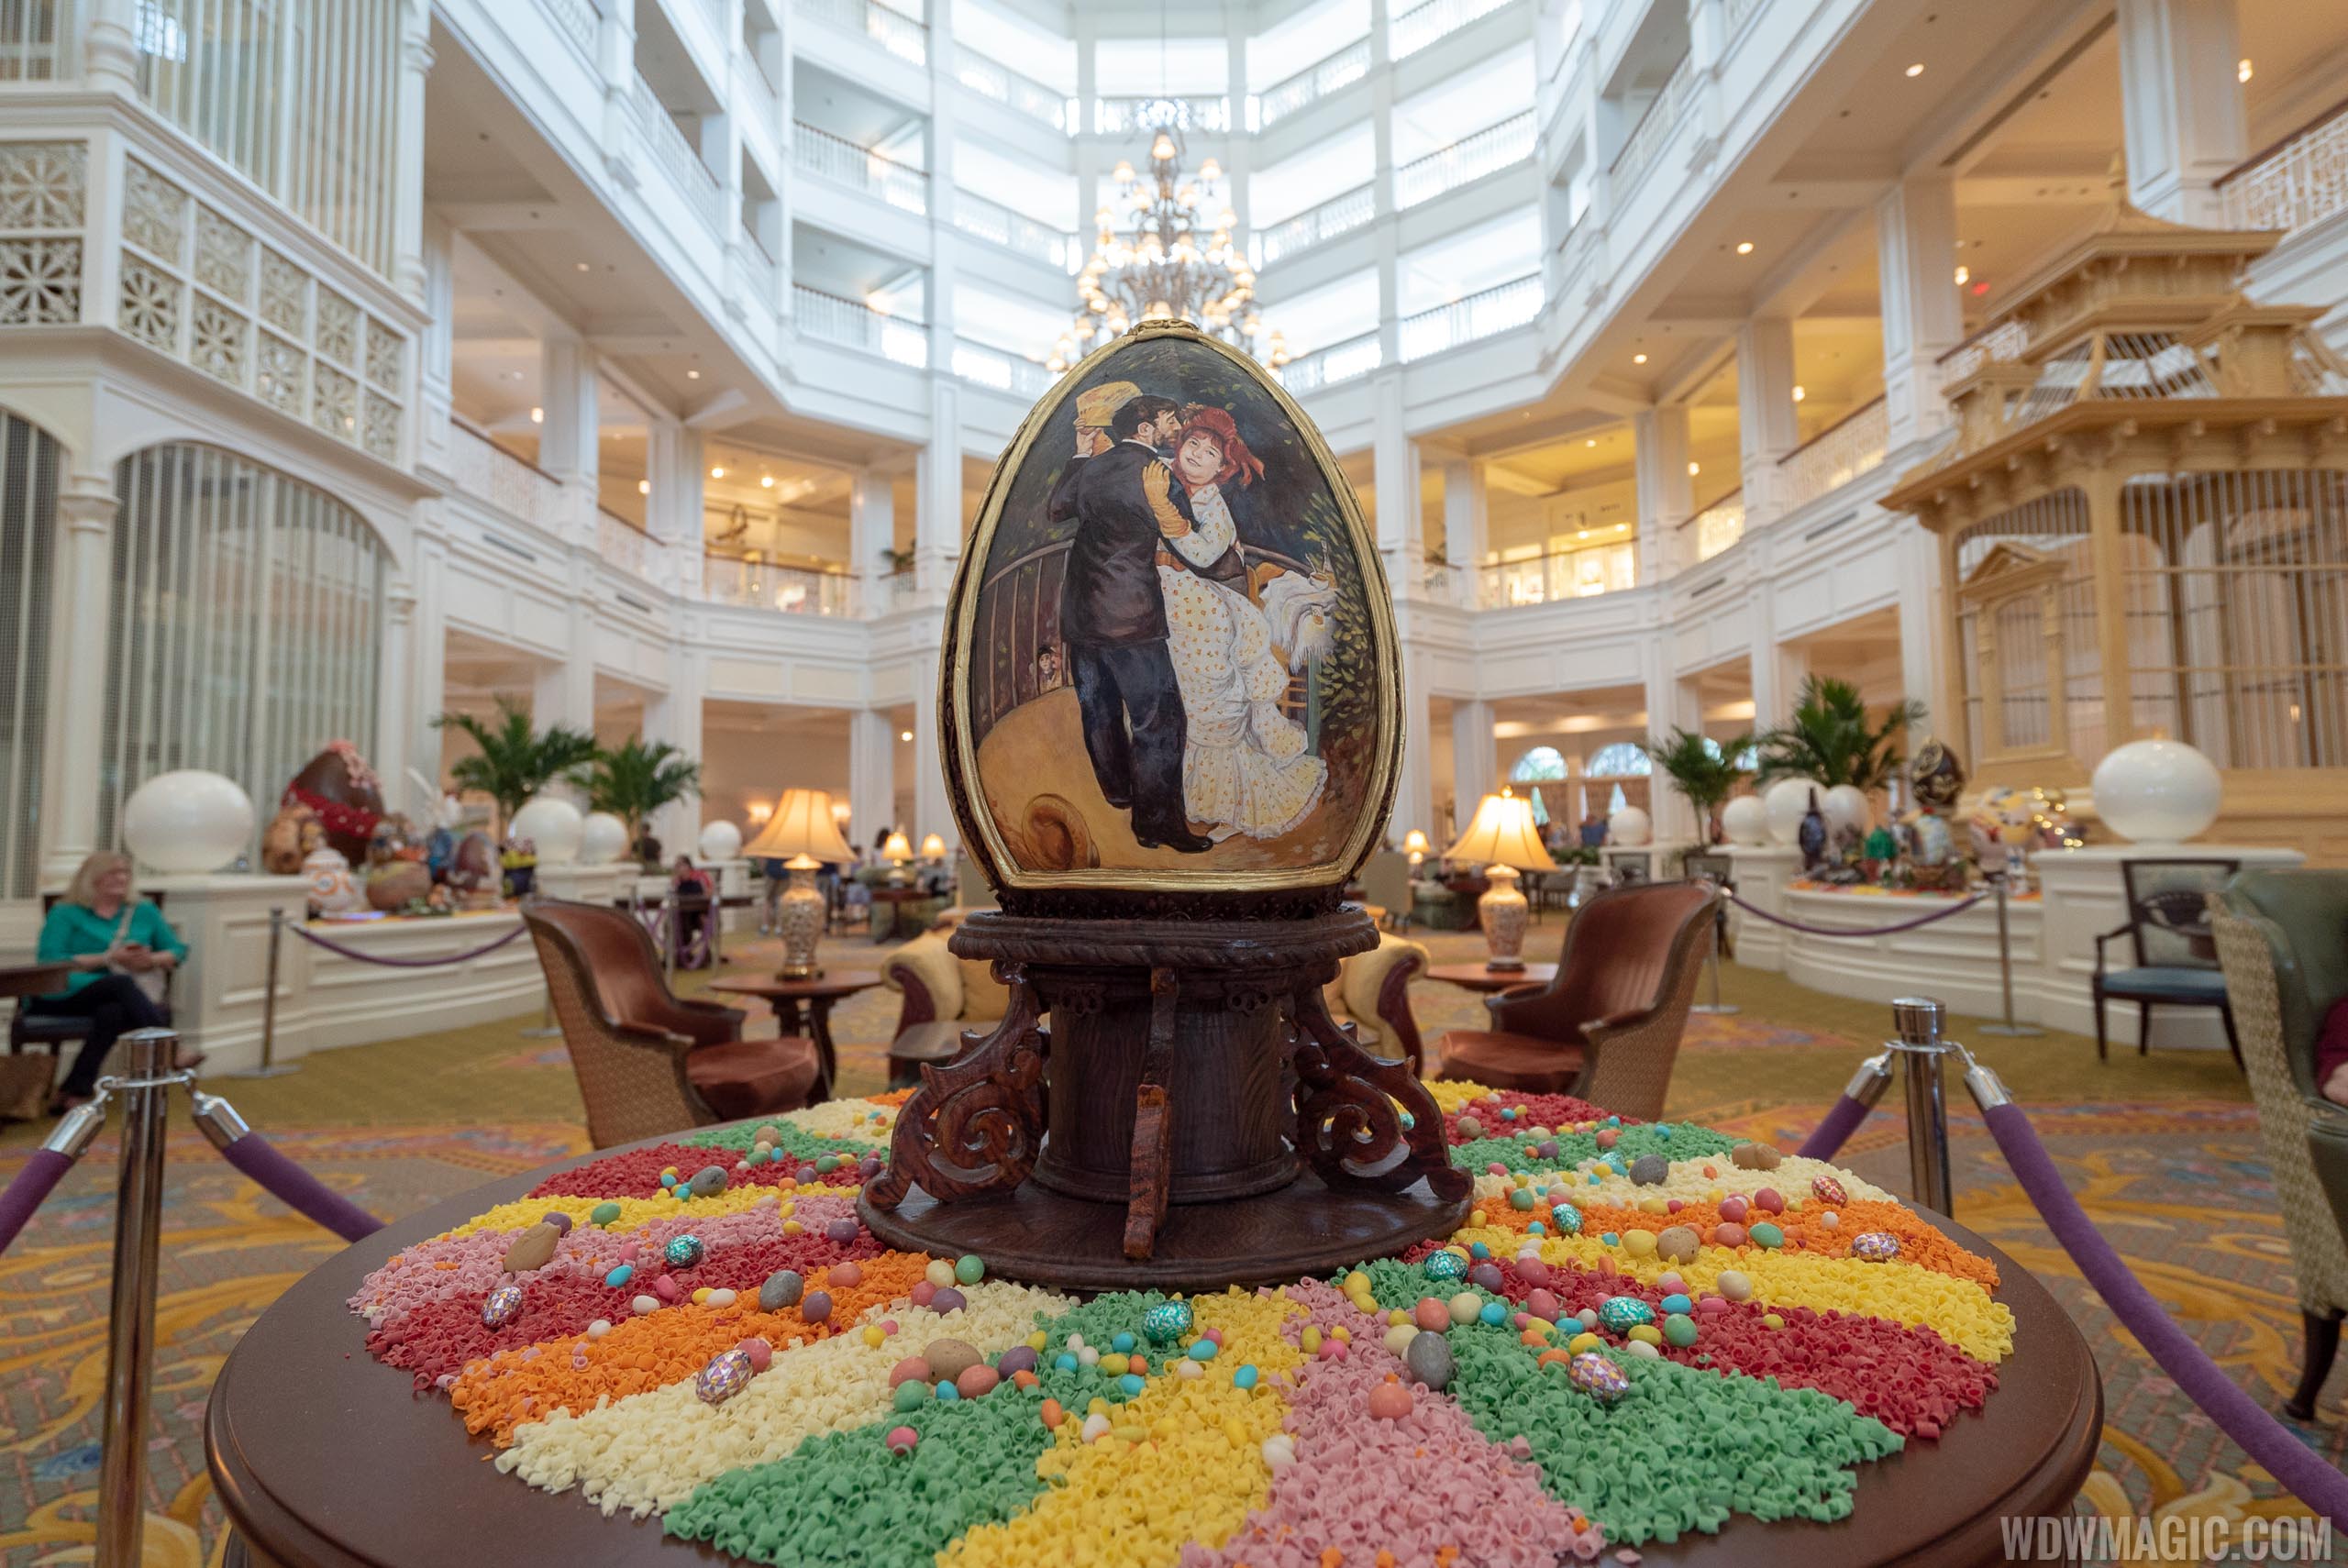 PHOTOS 2019 Easter Egg display at Disney's Grand Floridian Resort